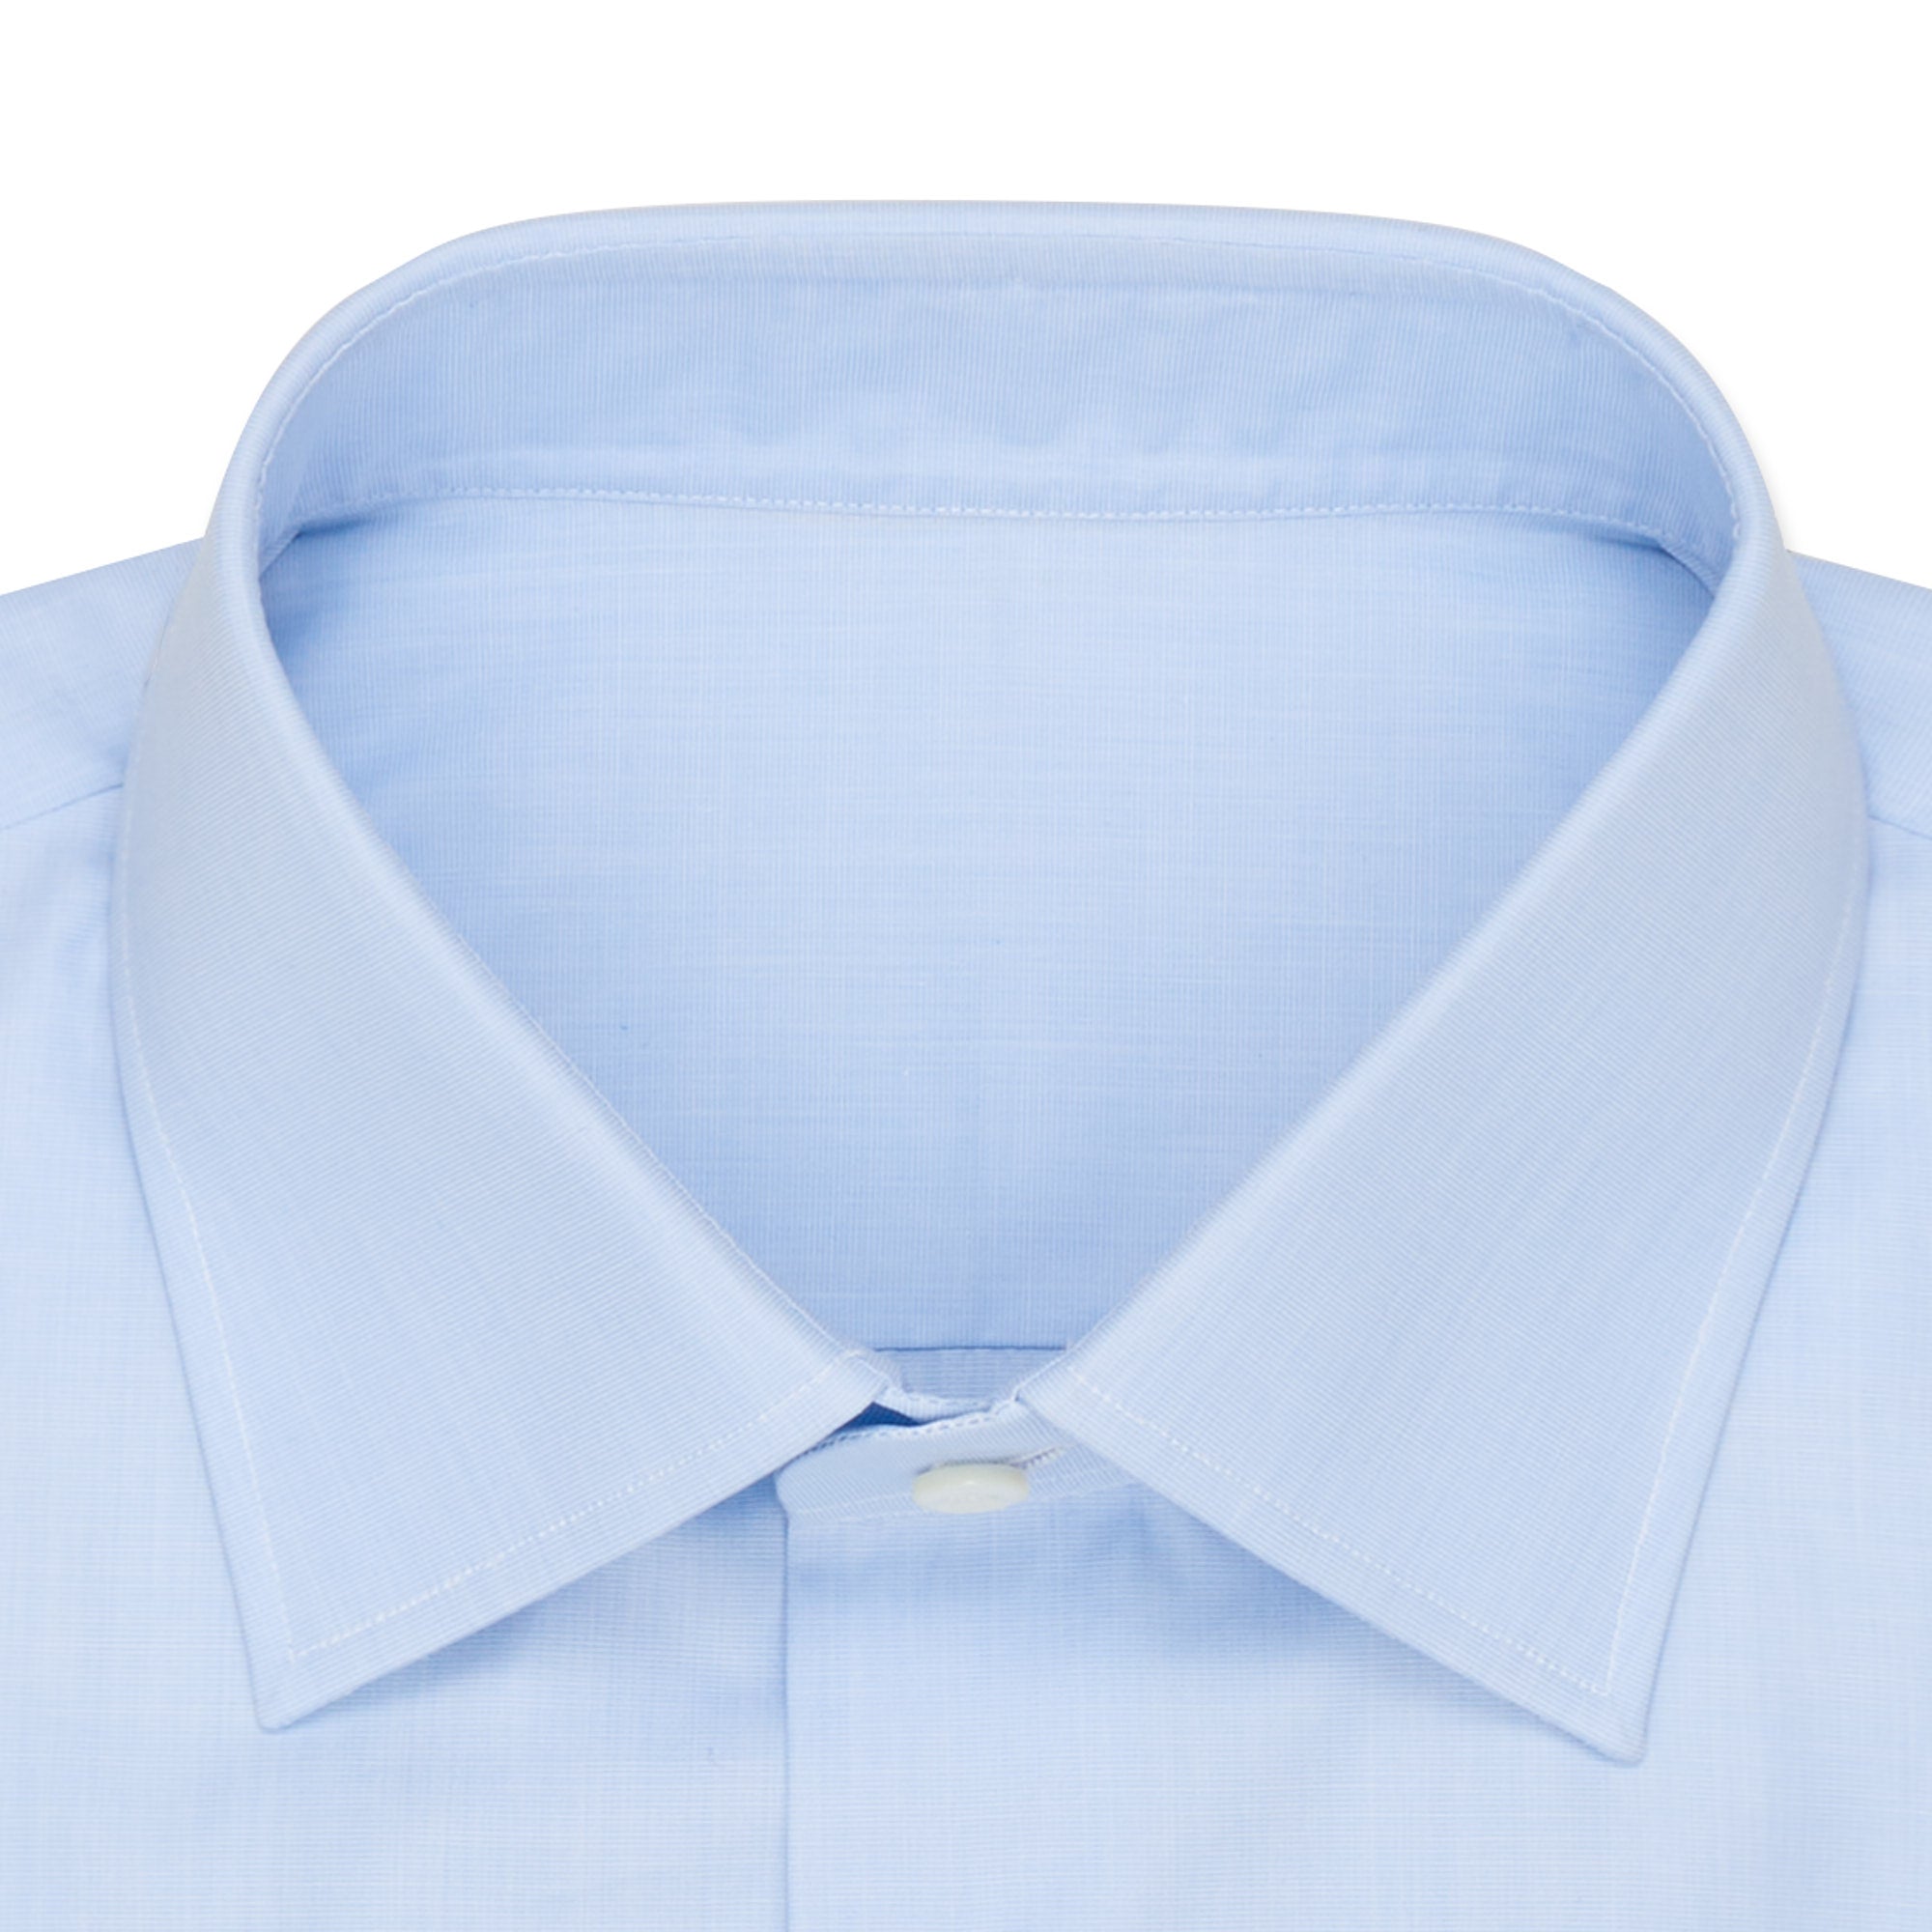 BESPOKE ATHENS Handmade Blue End-on-End Cotton Dress Shirt US 17 EU 43 NEW BESPOKE ATHENS